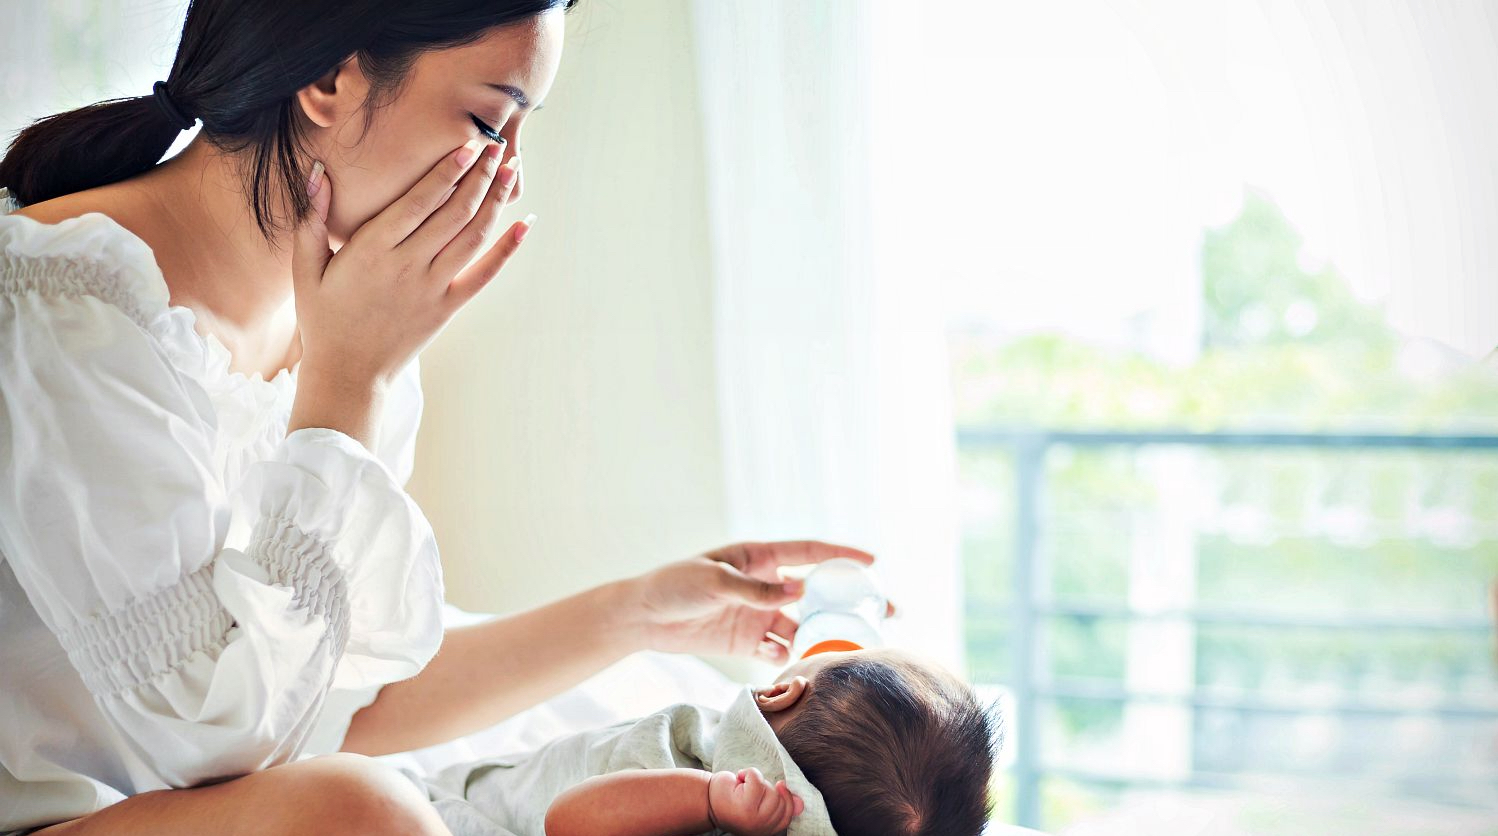 7 Newborn Sleep Tips for the Sleep-Deprived Parent